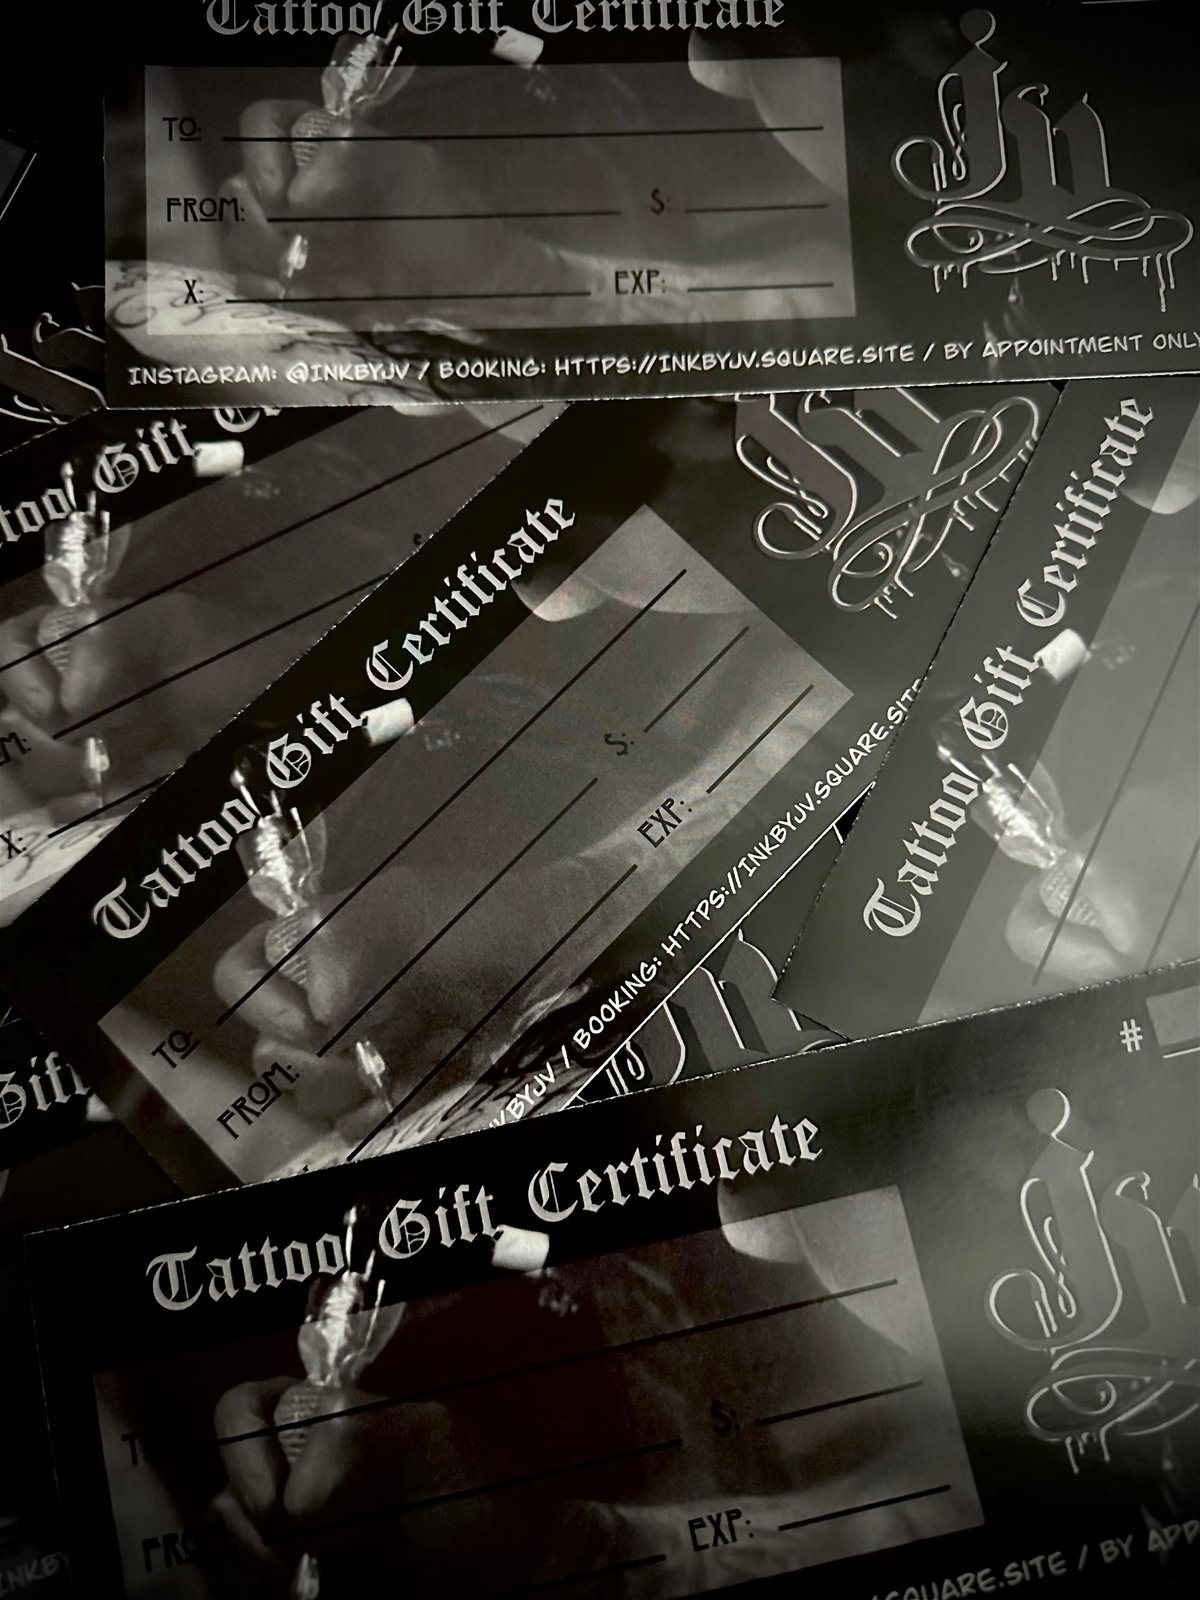 Tattoo Shop Gift Certificate Template Grey  Doc Formats  Certificate  templates Gift certificate template Tattoo shop